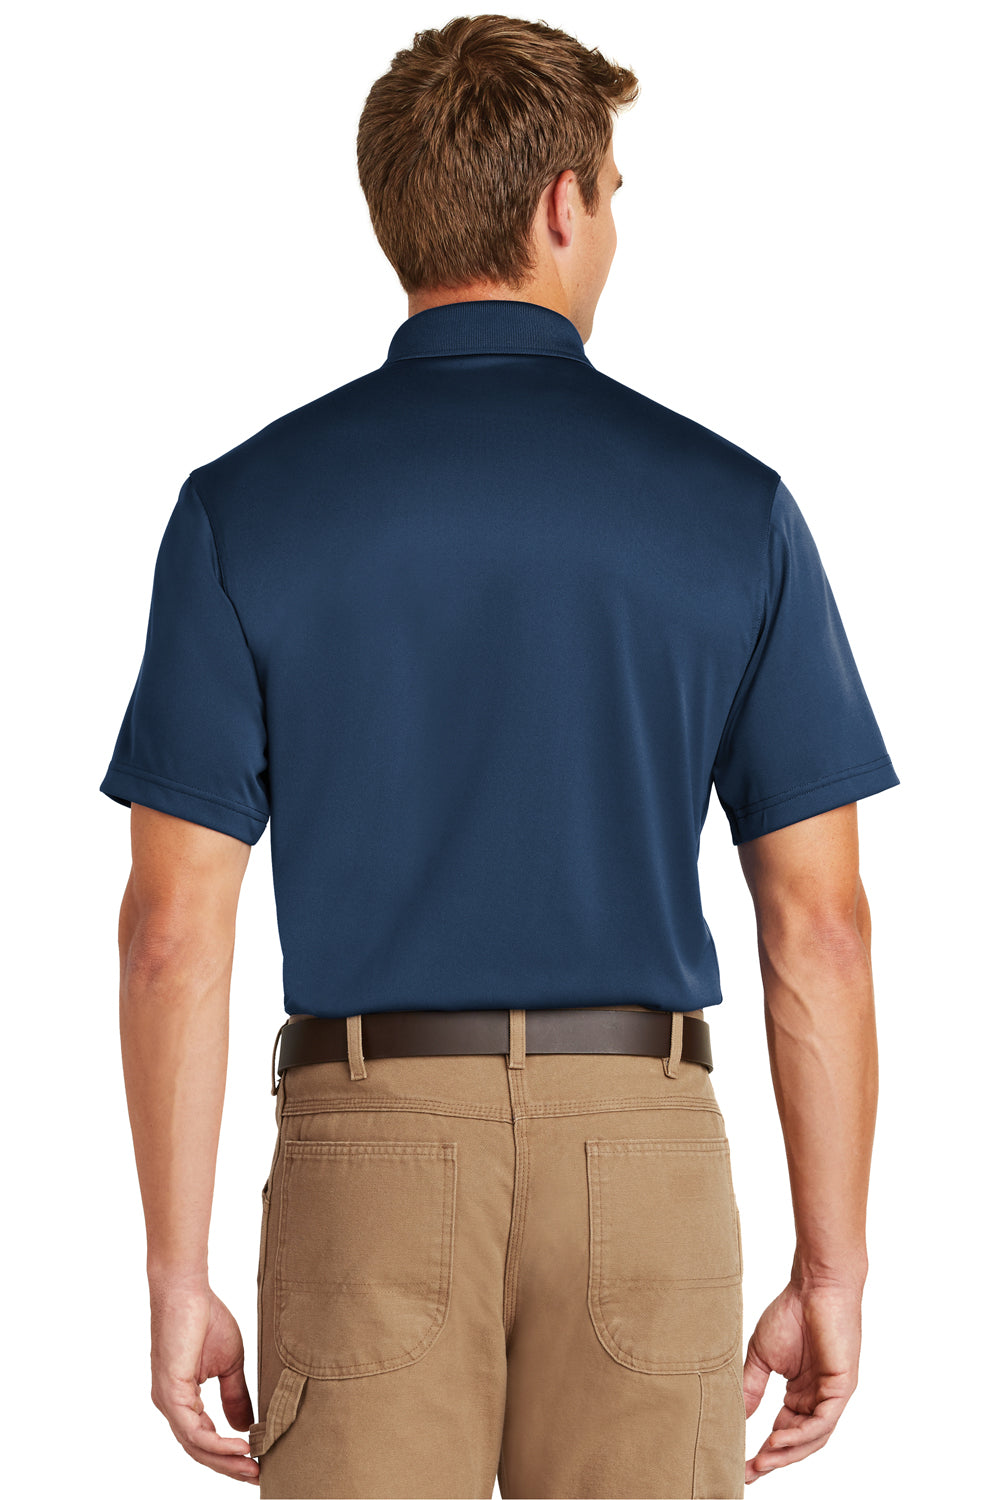 CornerStone CS412 Mens Select Moisture Wicking Short Sleeve Polo Shirt Regatta Blue Back